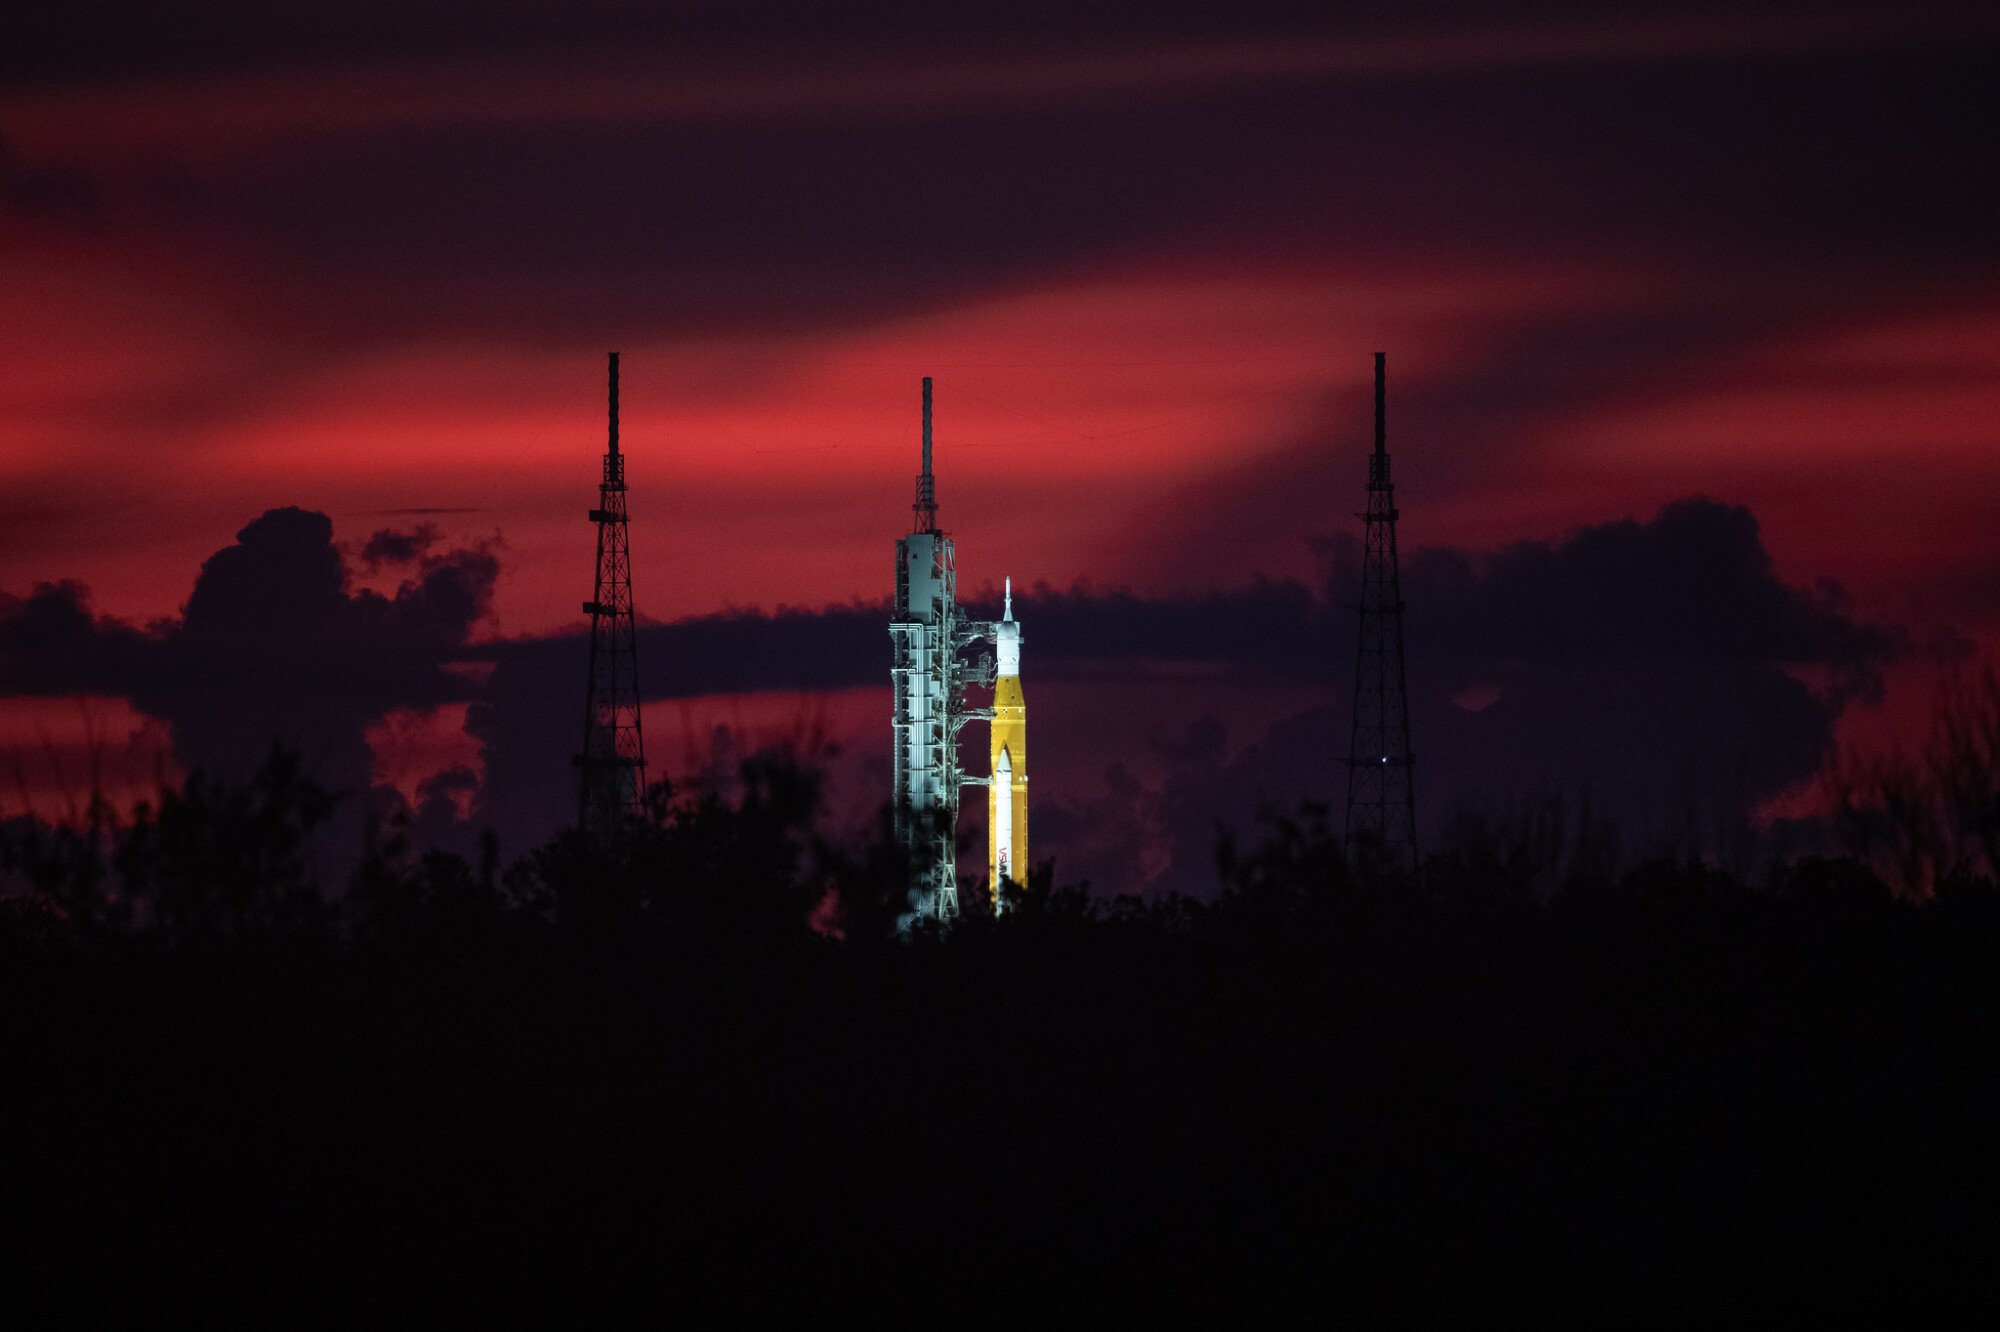 NASA's SLS rocket on the launchapd